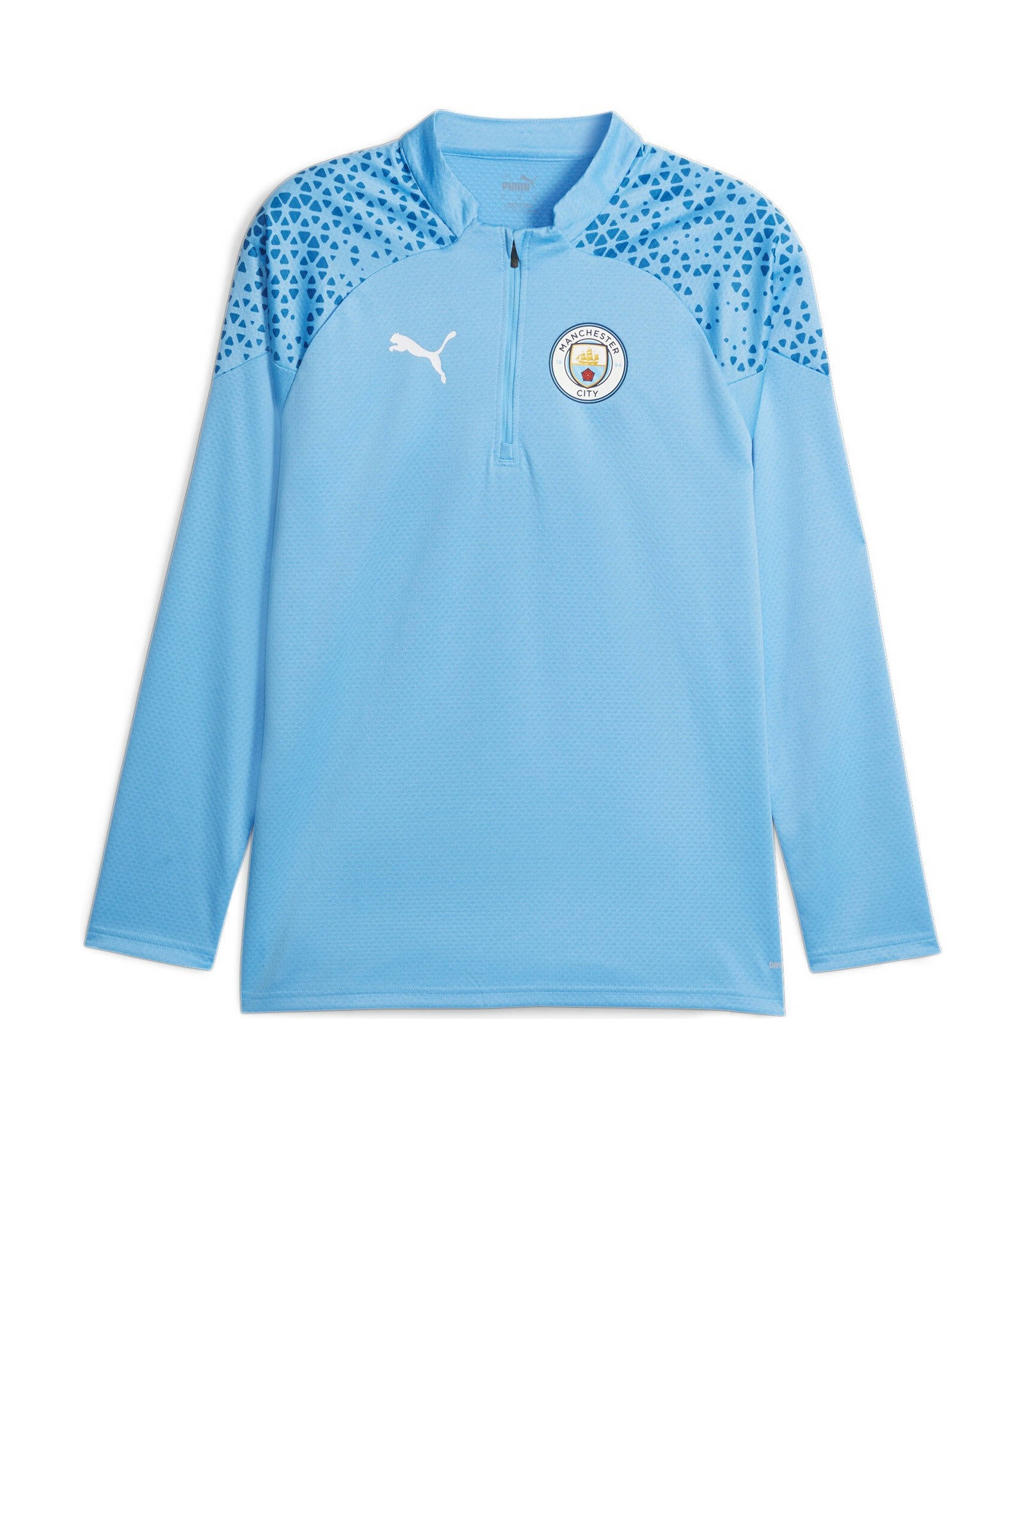 Blauwe heren Puma Manchester City training voetbalshirt van gerecycled polyester met logo dessin, lange mouwen, ronde hals en halve rits